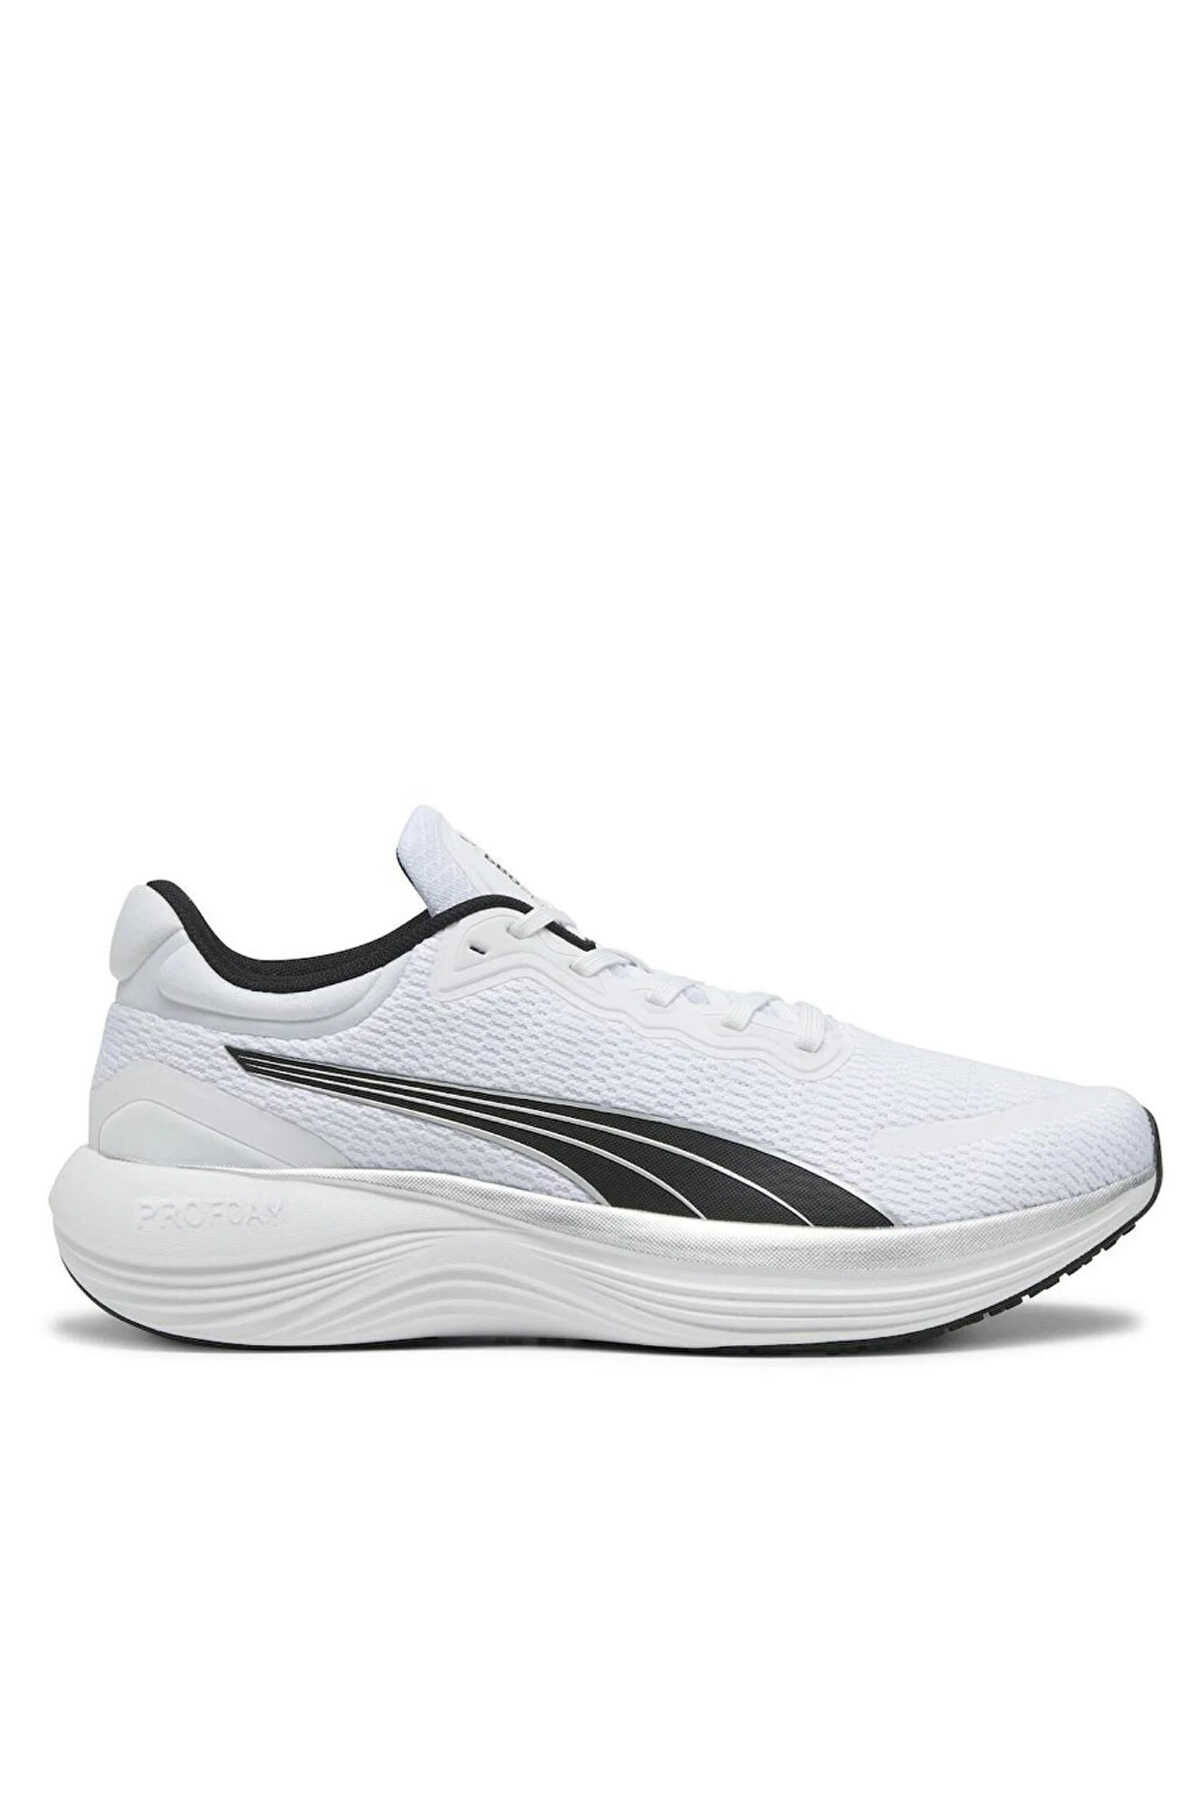 Puma - Puma Scend Pro Erkek Sneaker Ayakkabı Beyaz / Siyah